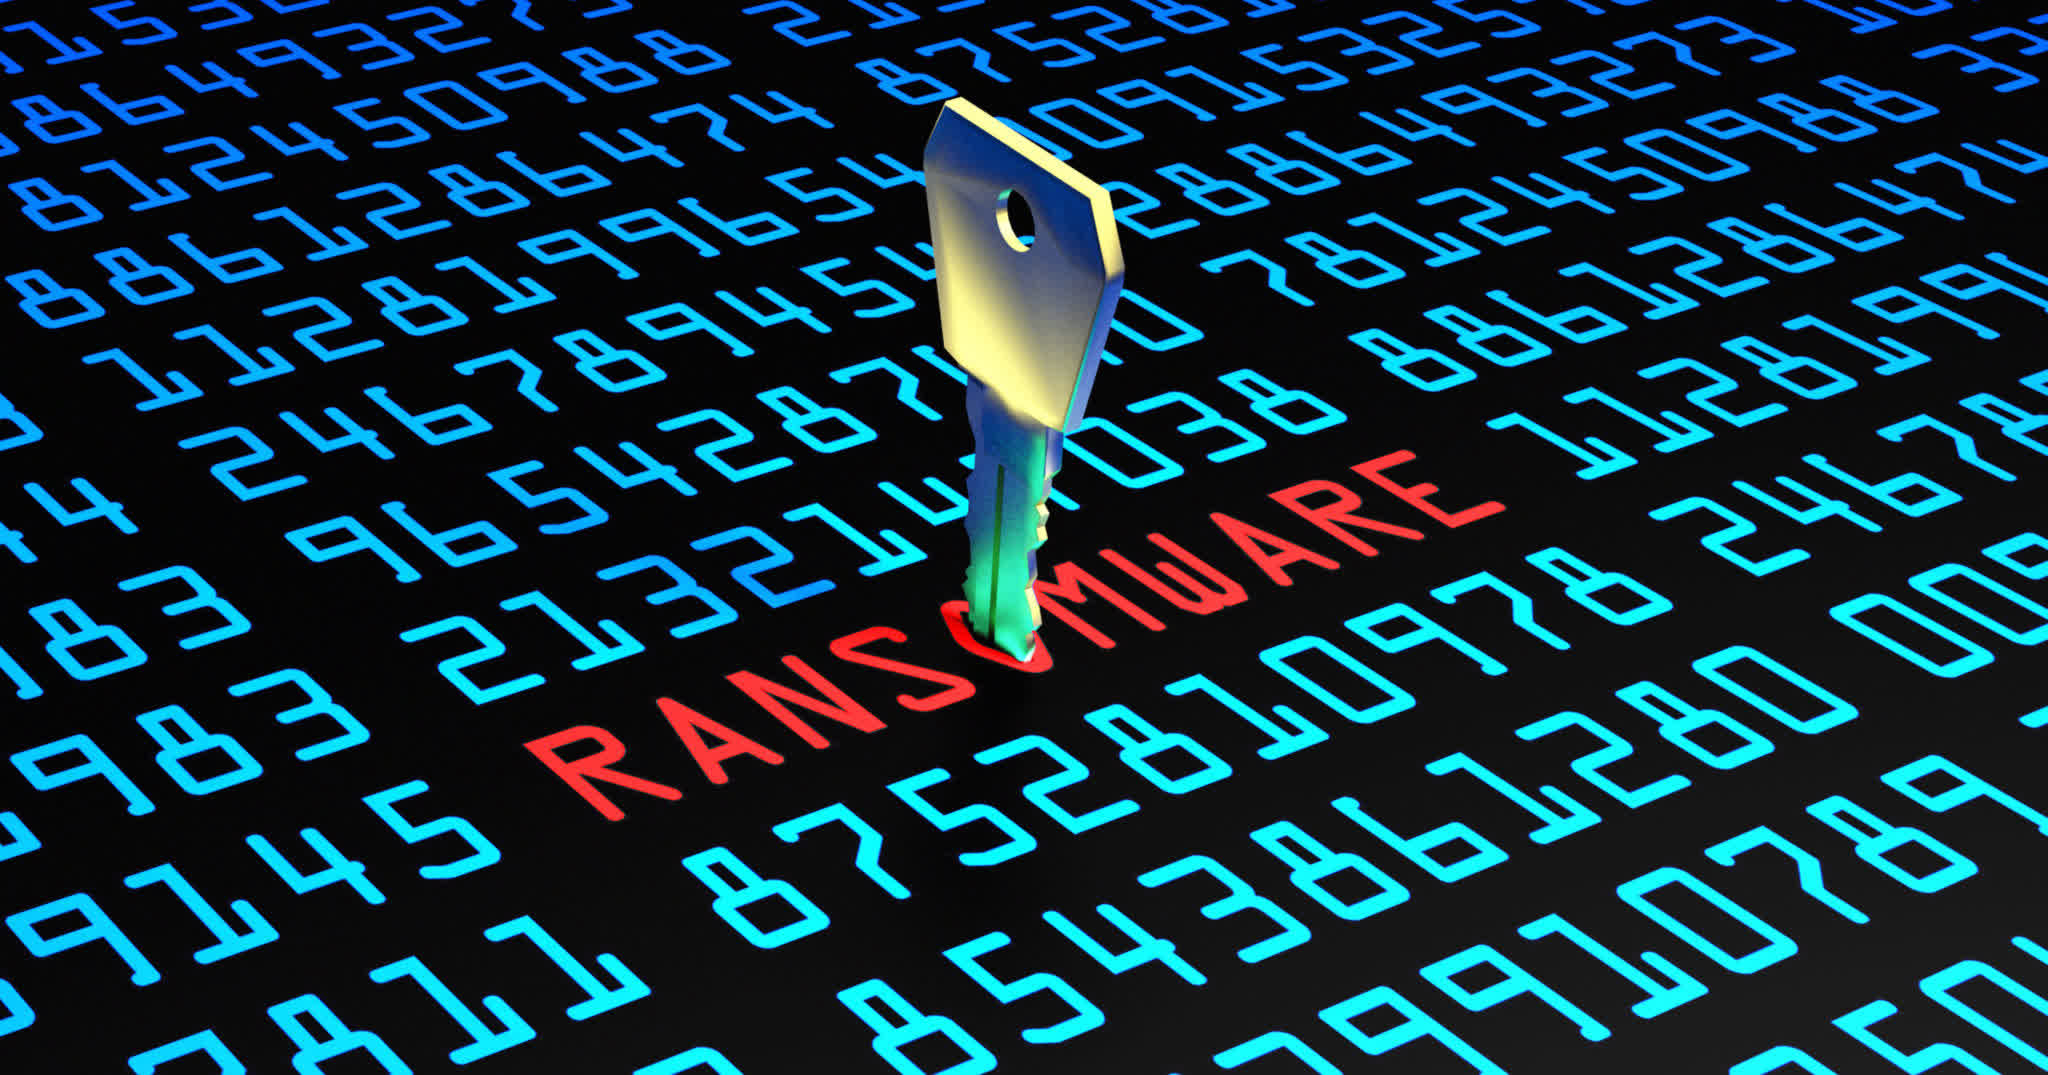 Hackers publish MSI private keys, enabling signed malware